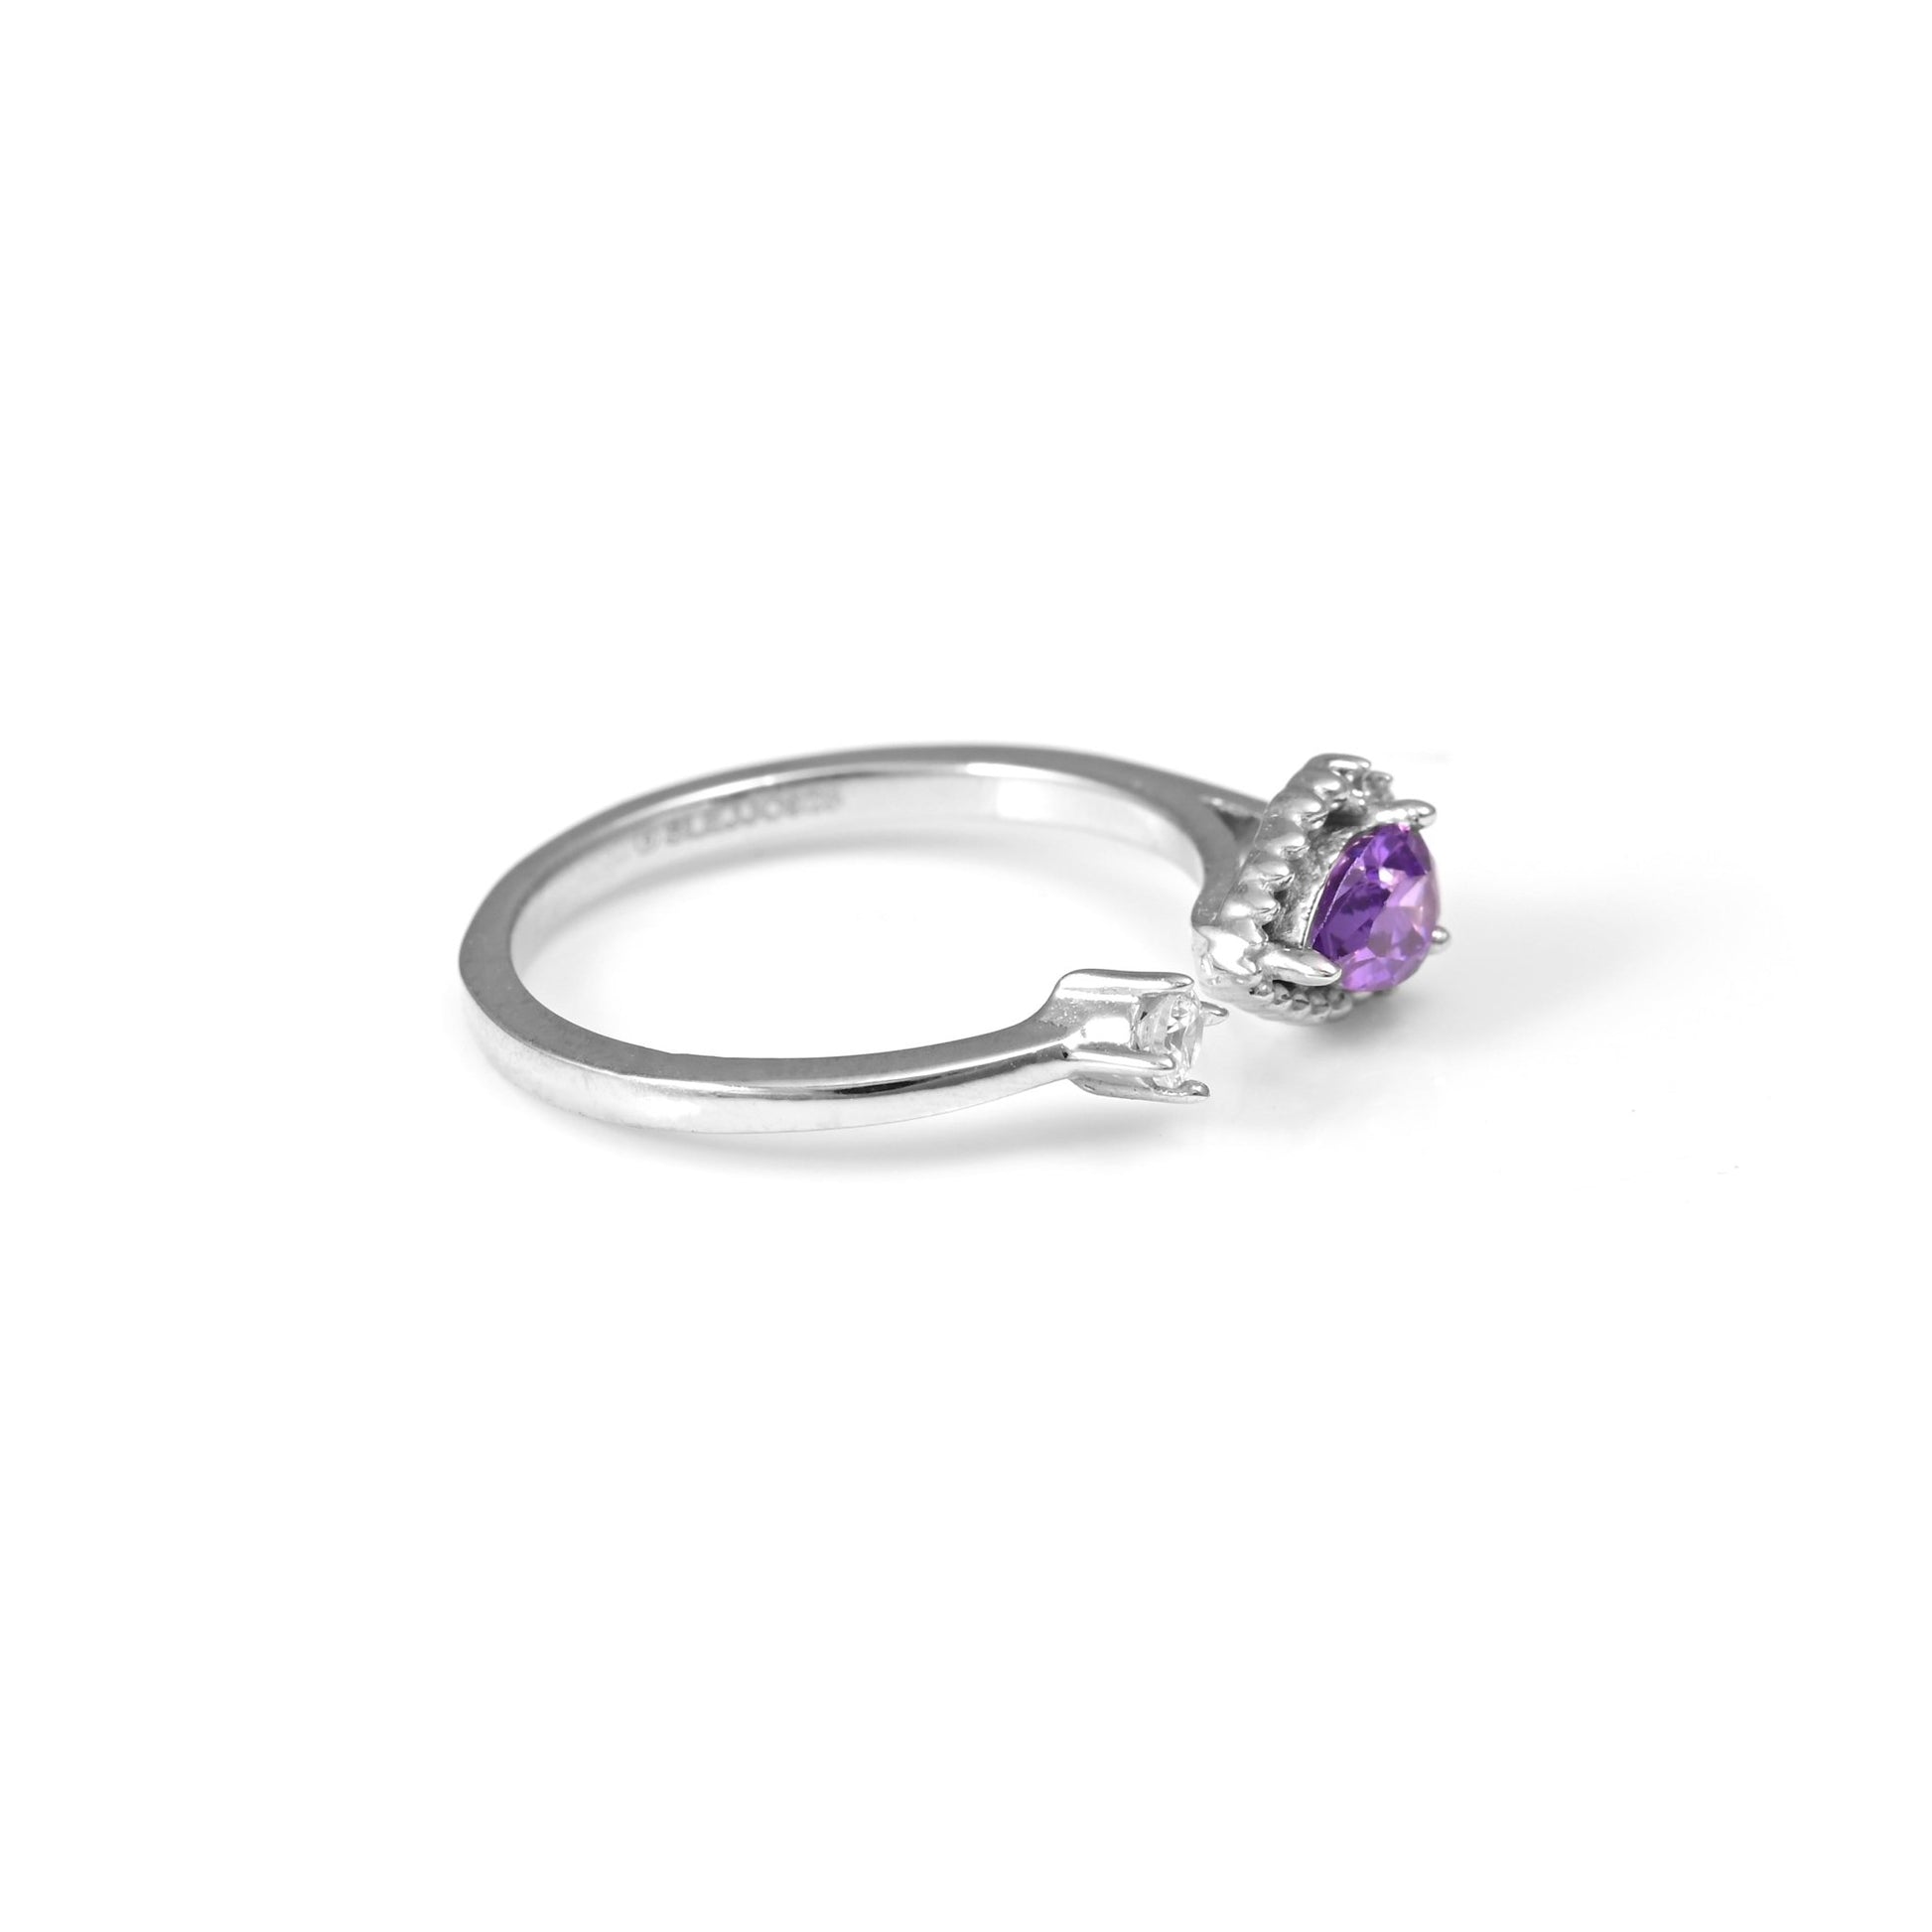 The Purple Zirconia Ring - Vinayak - House of Silver